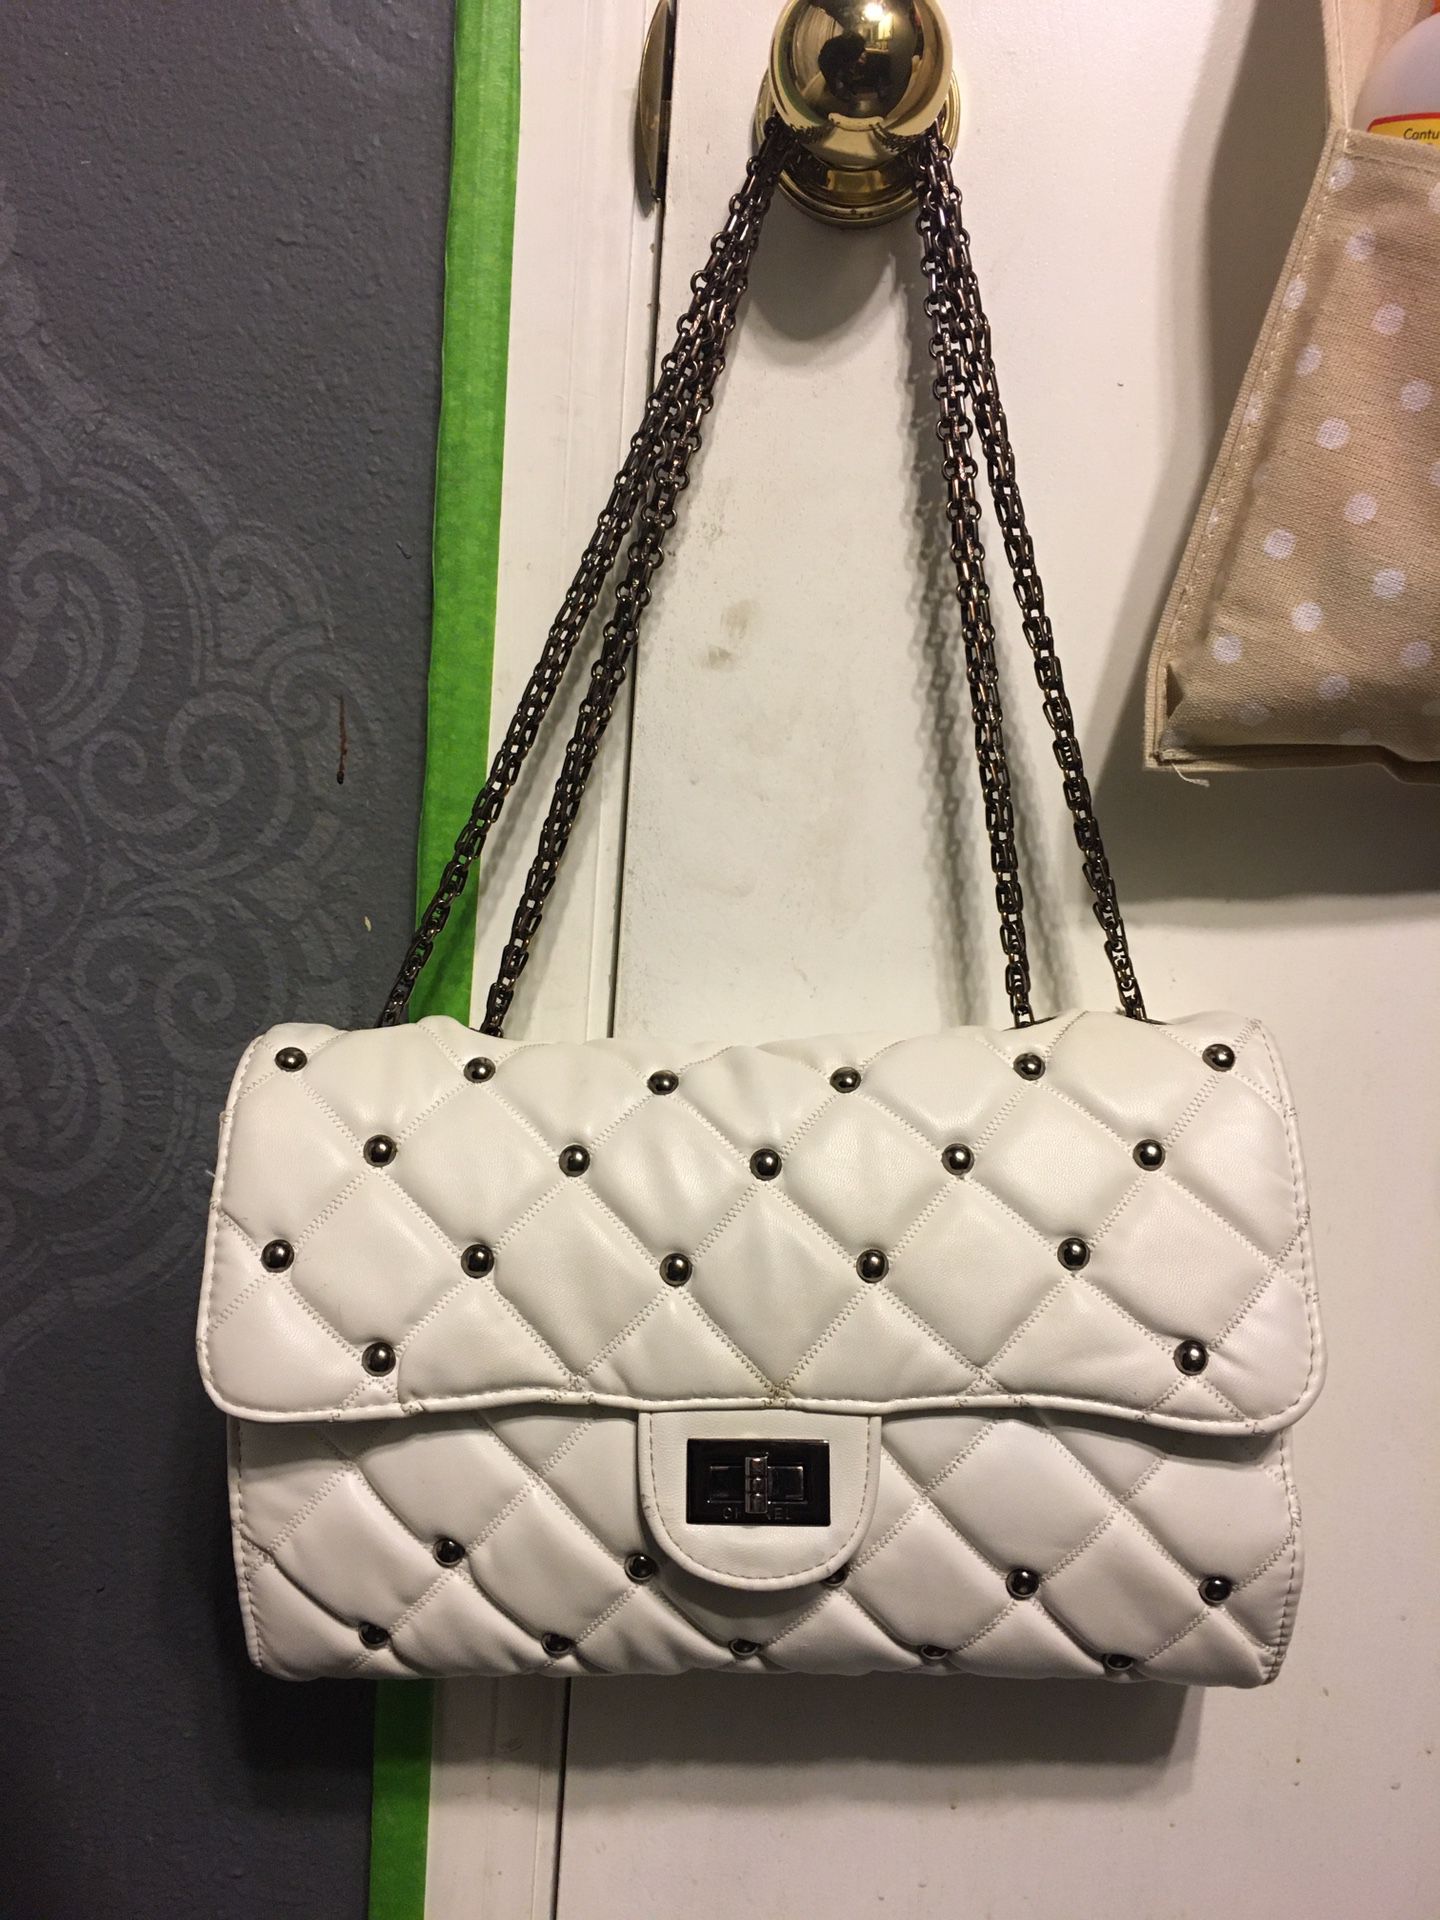 Chanel vintage 2.55 white flap bag